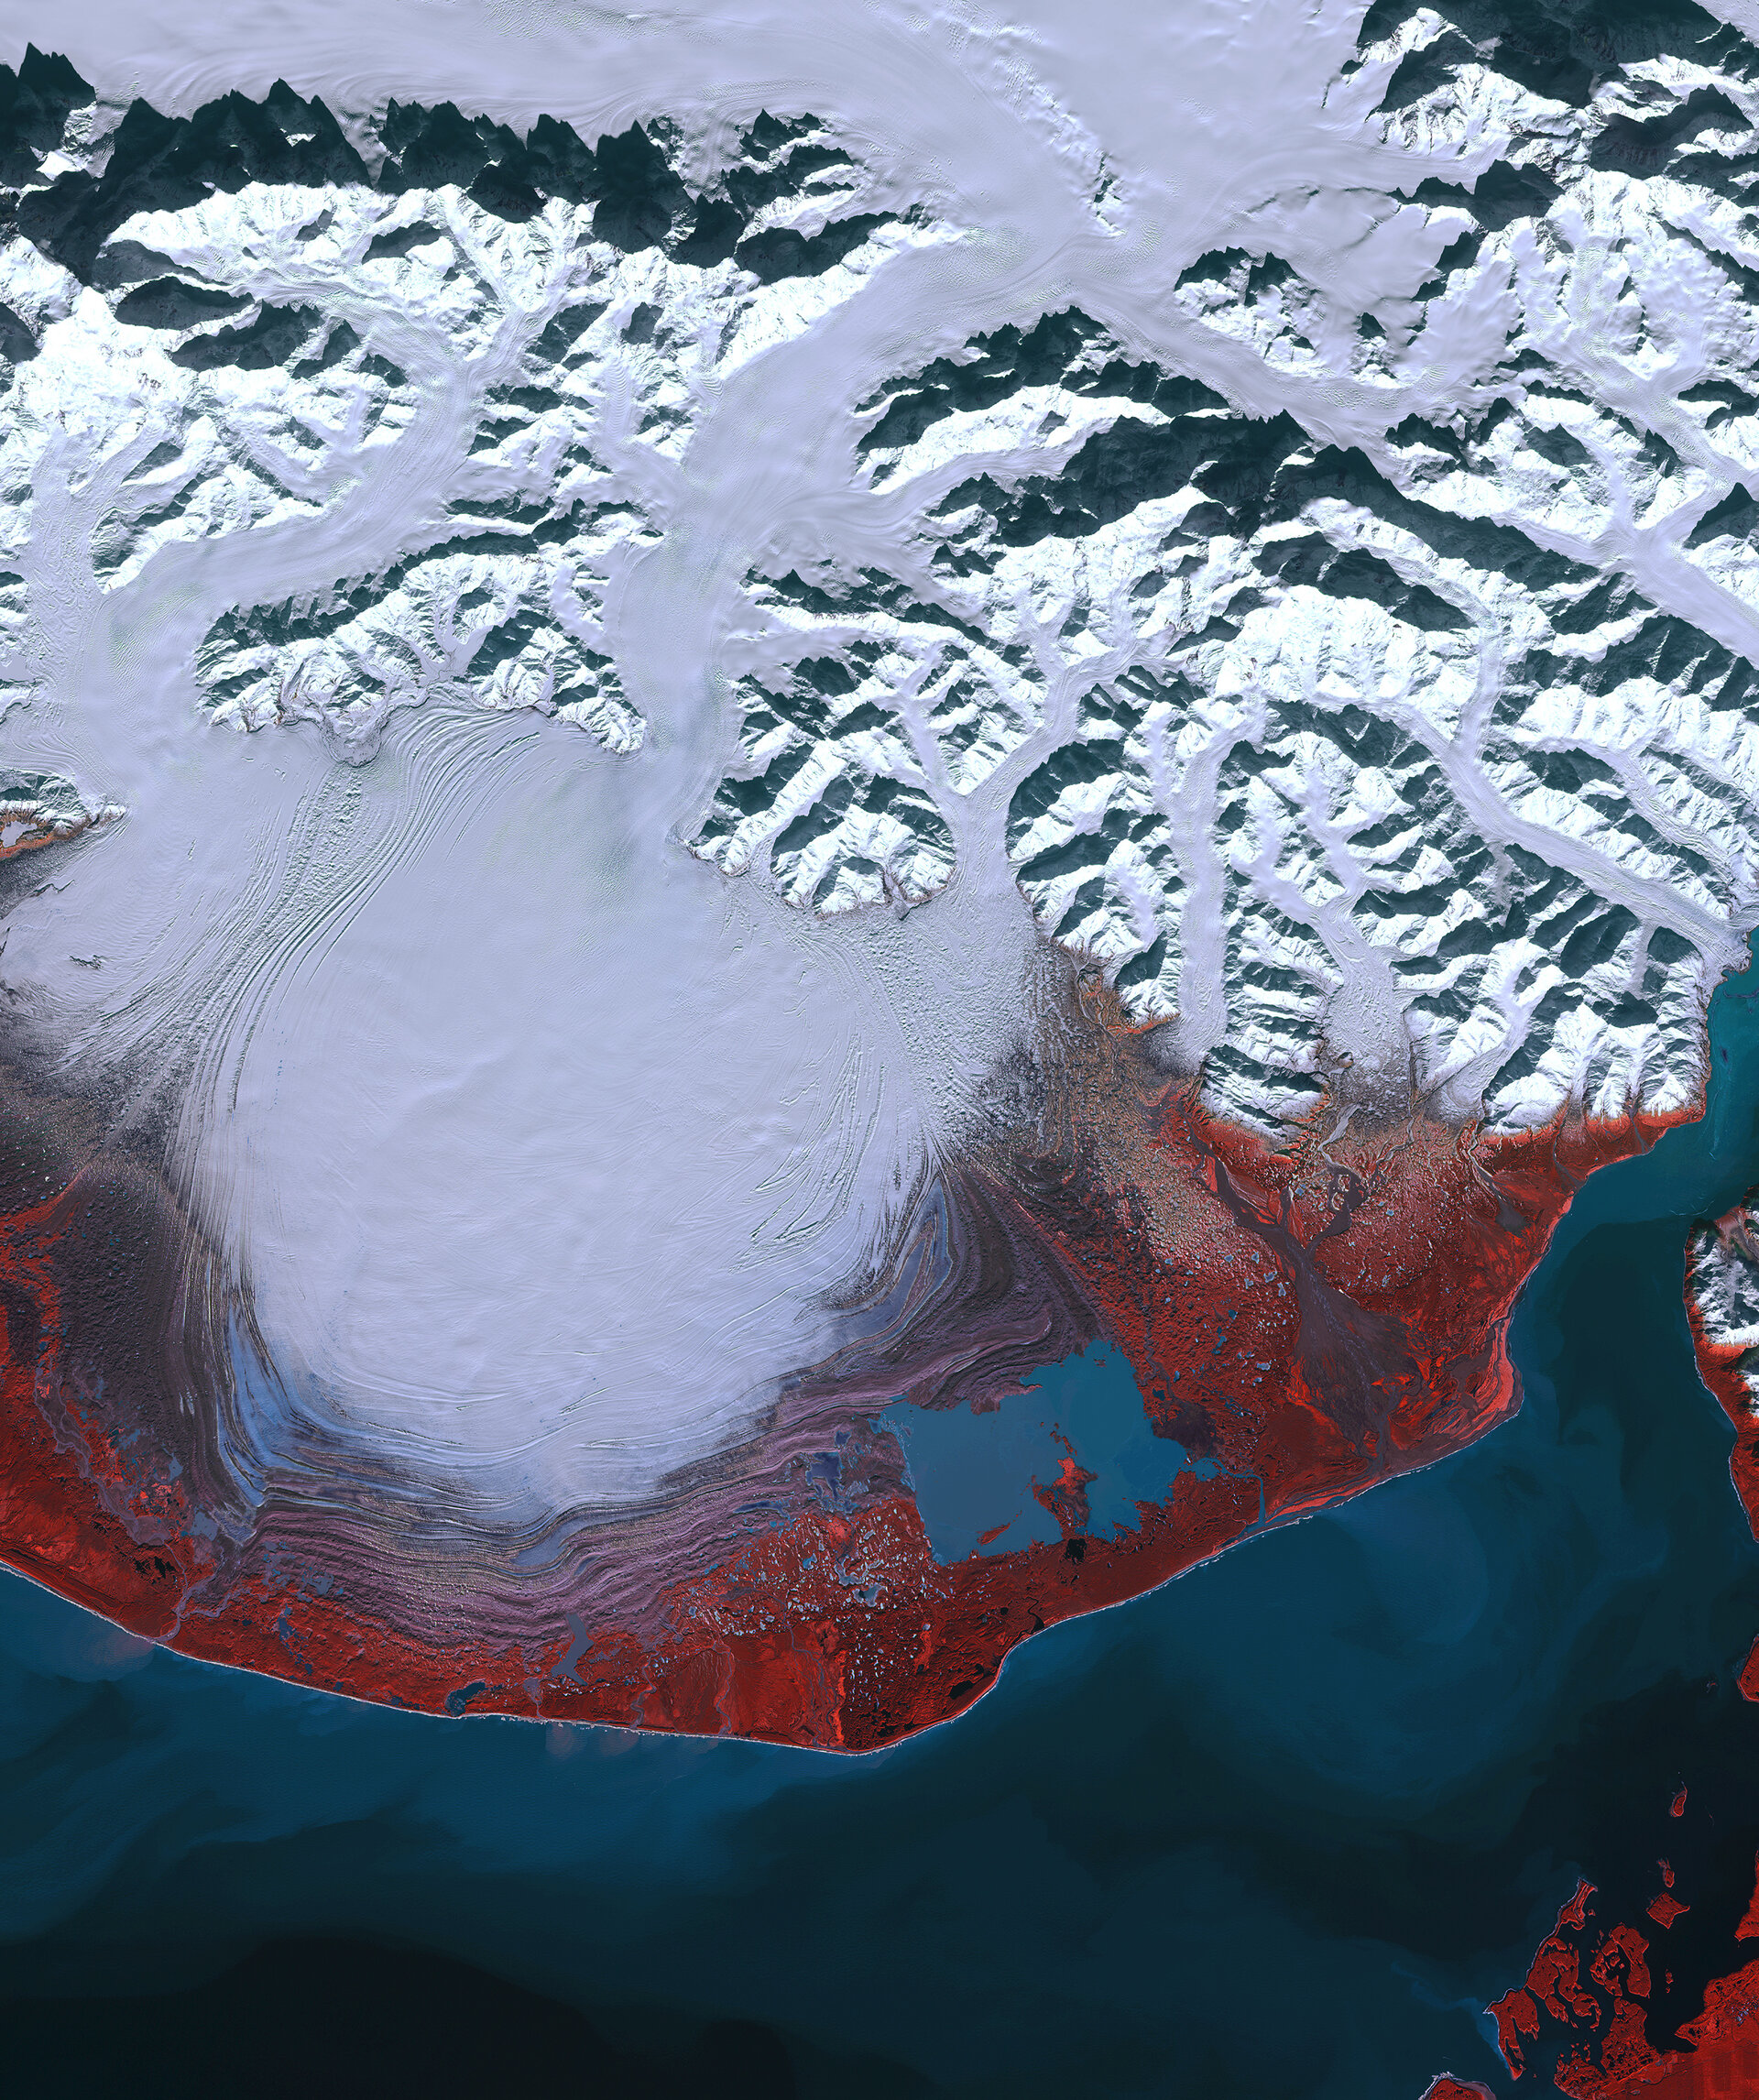 Ghiacciaio Malaspina, Alaska - Sentinel-2A